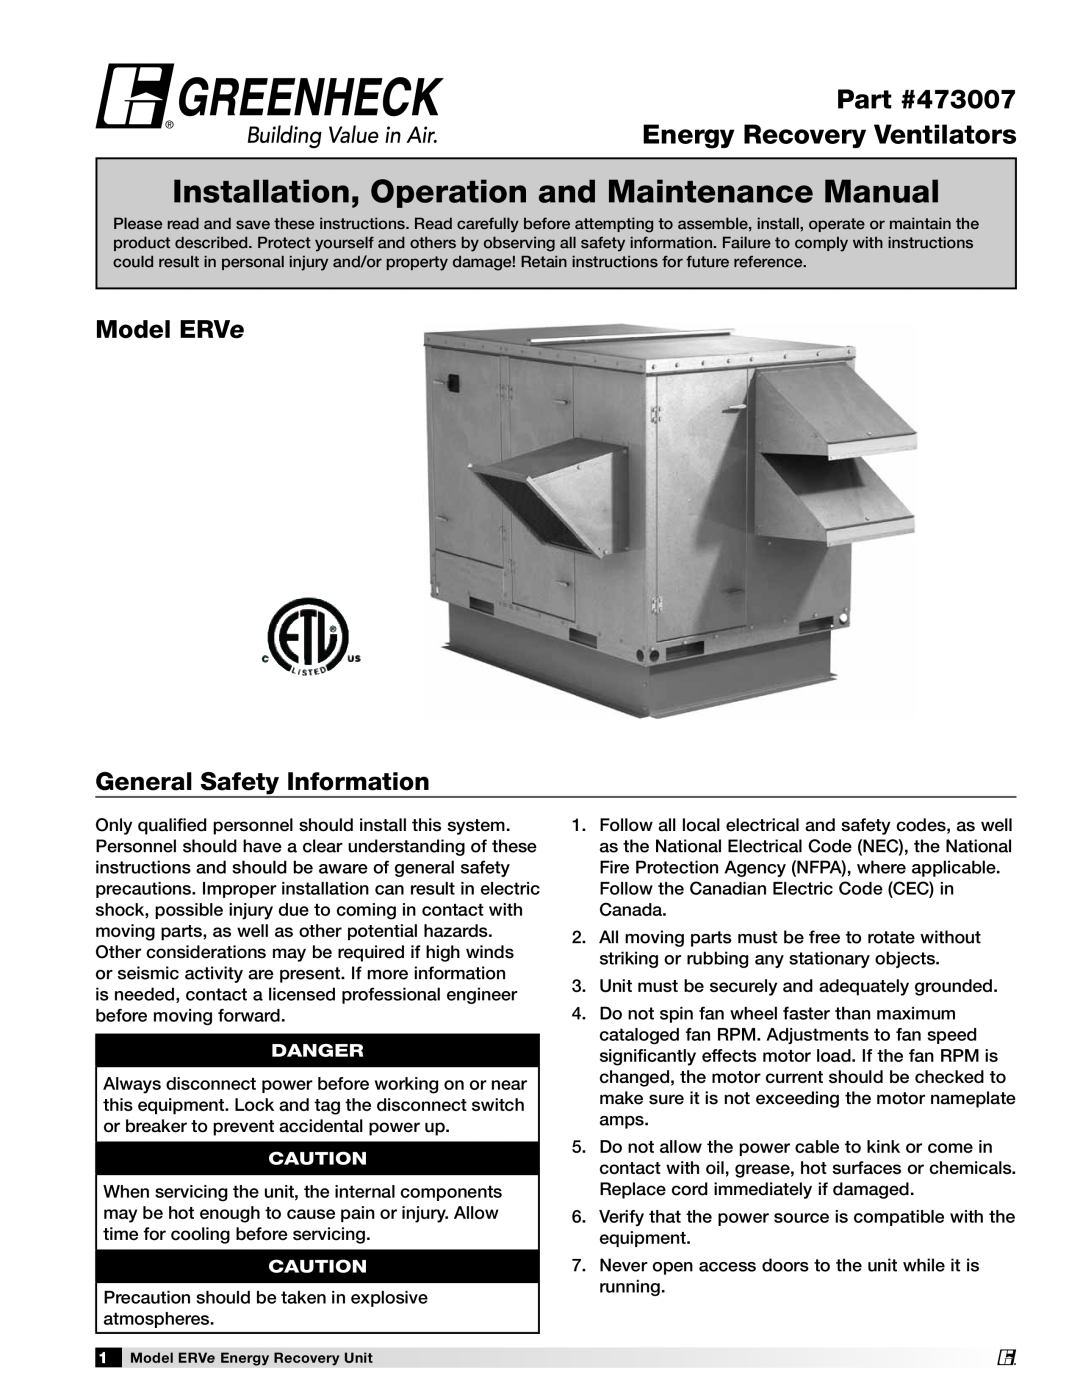 Greenheck Fan manual Model ERVe General Safety Information, Danger, Installation, Operation and Maintenance Manual 